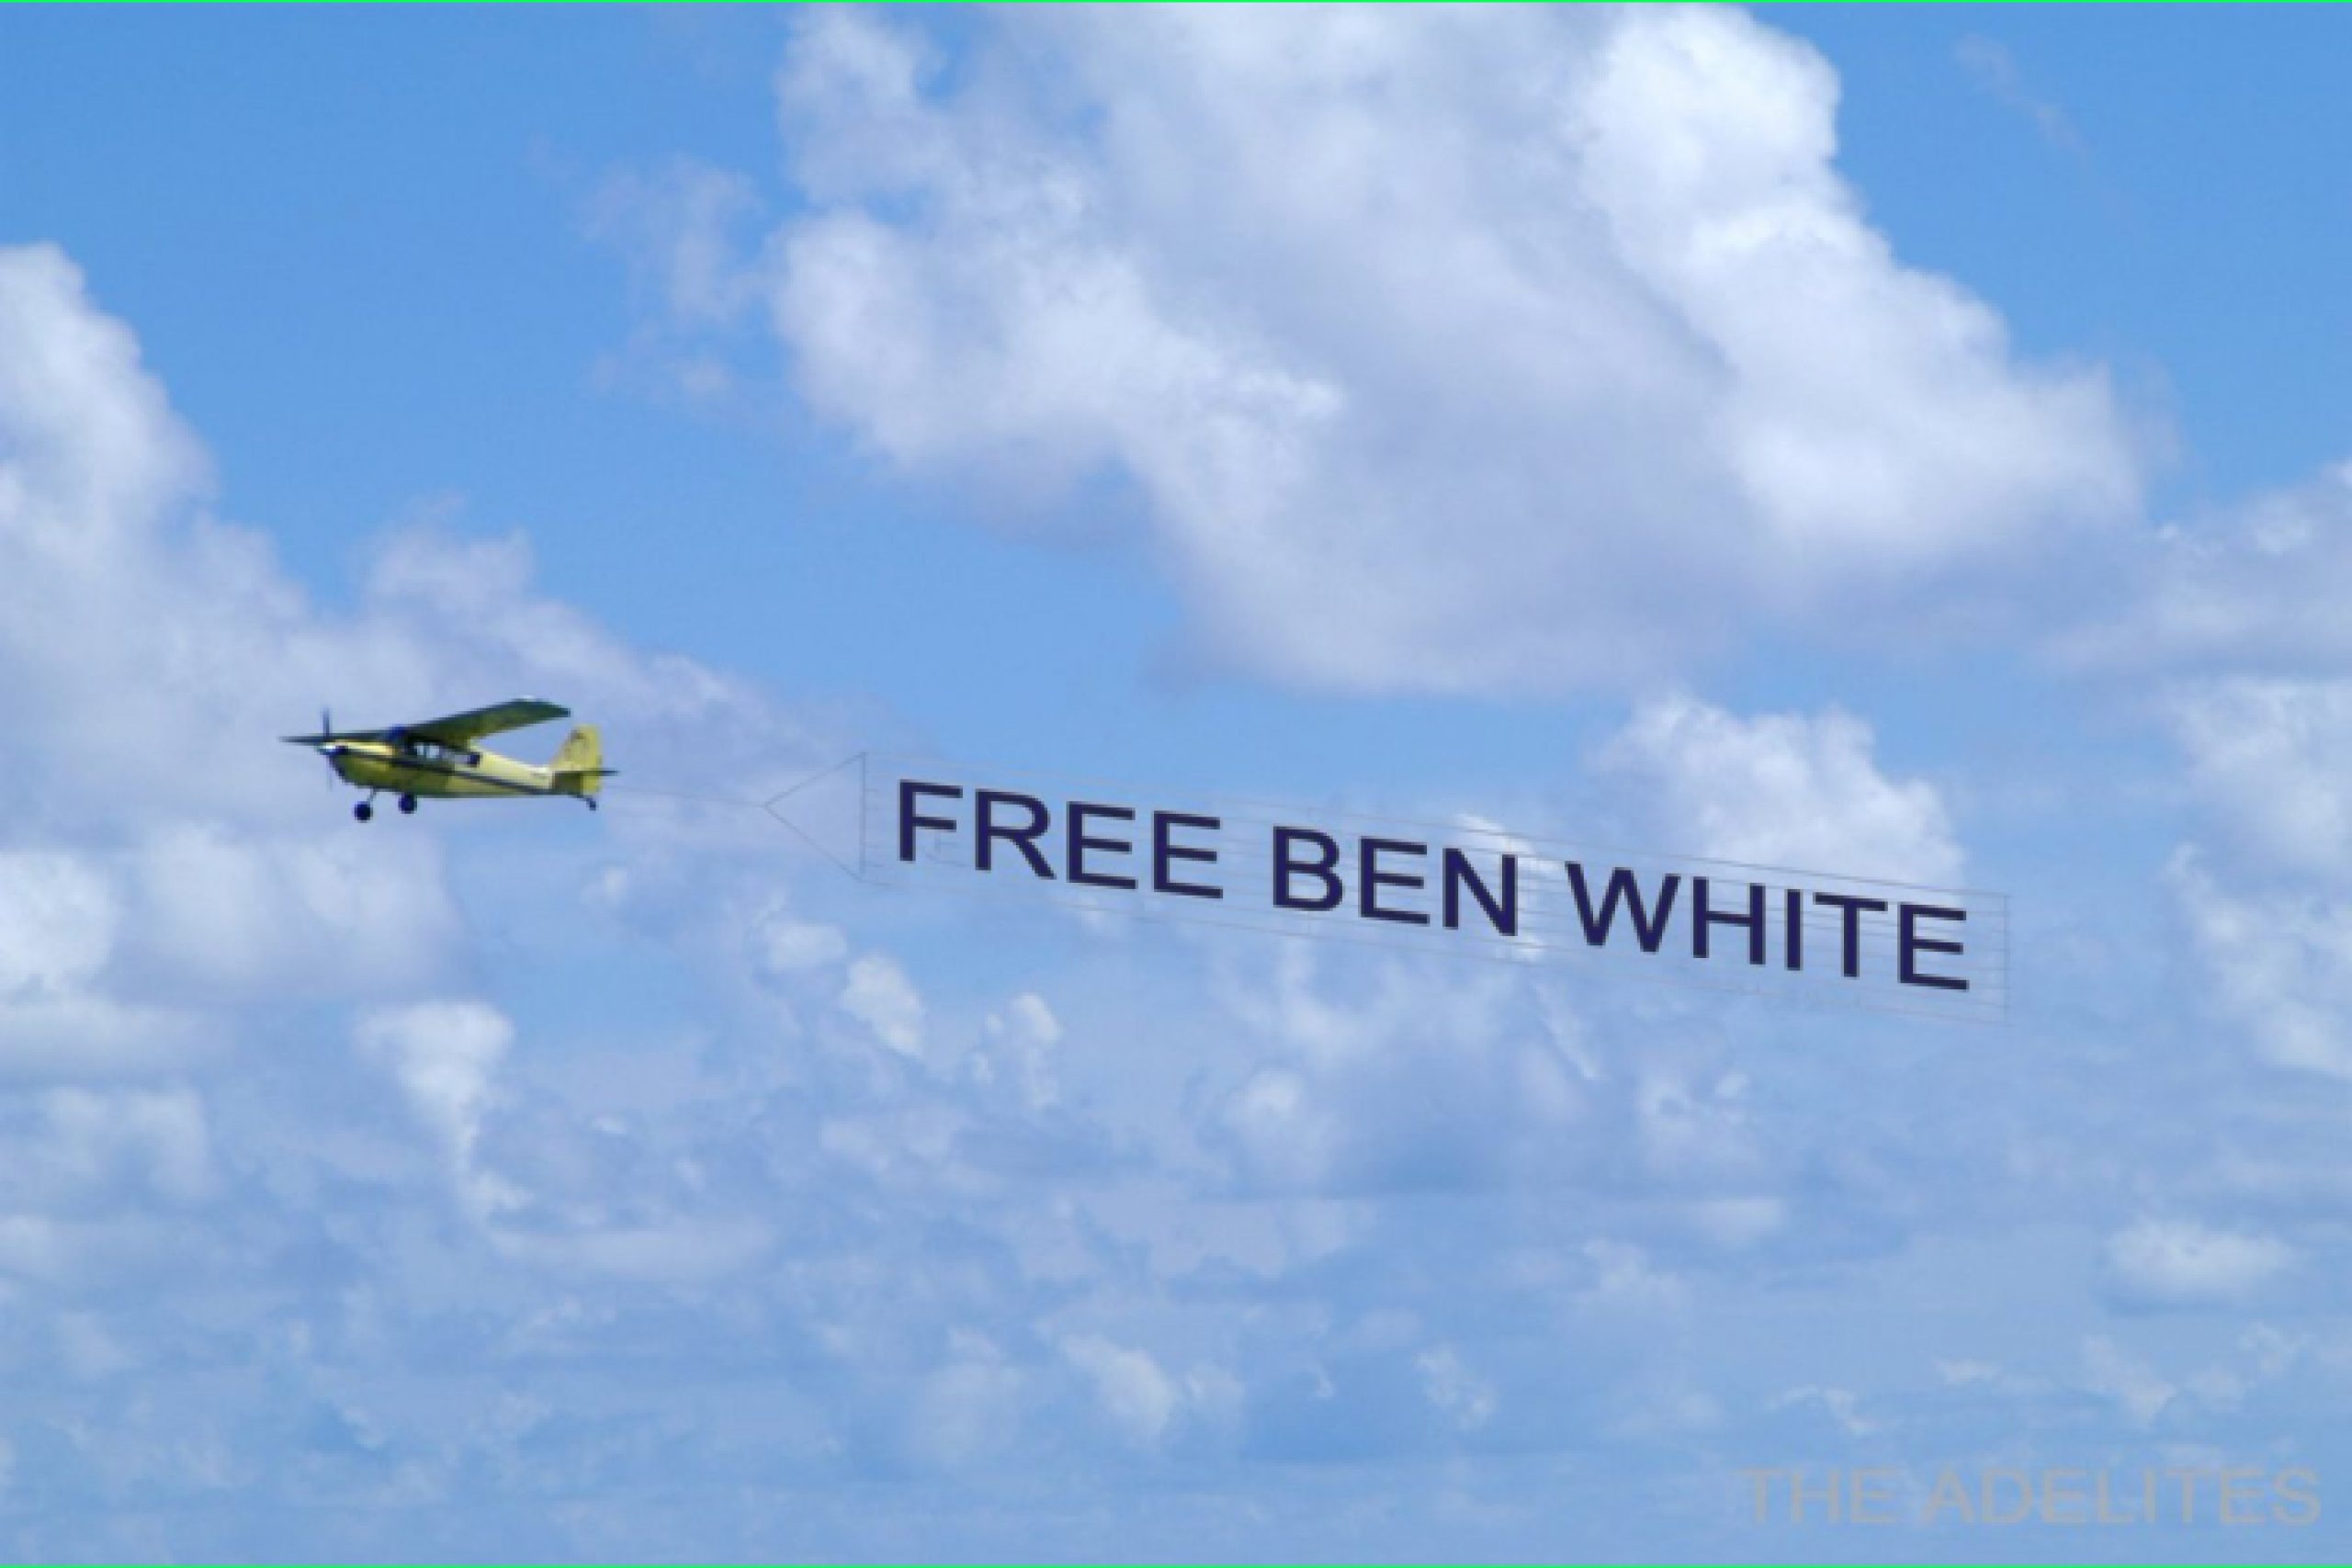 Free Ben White hashtag trends on Twitter